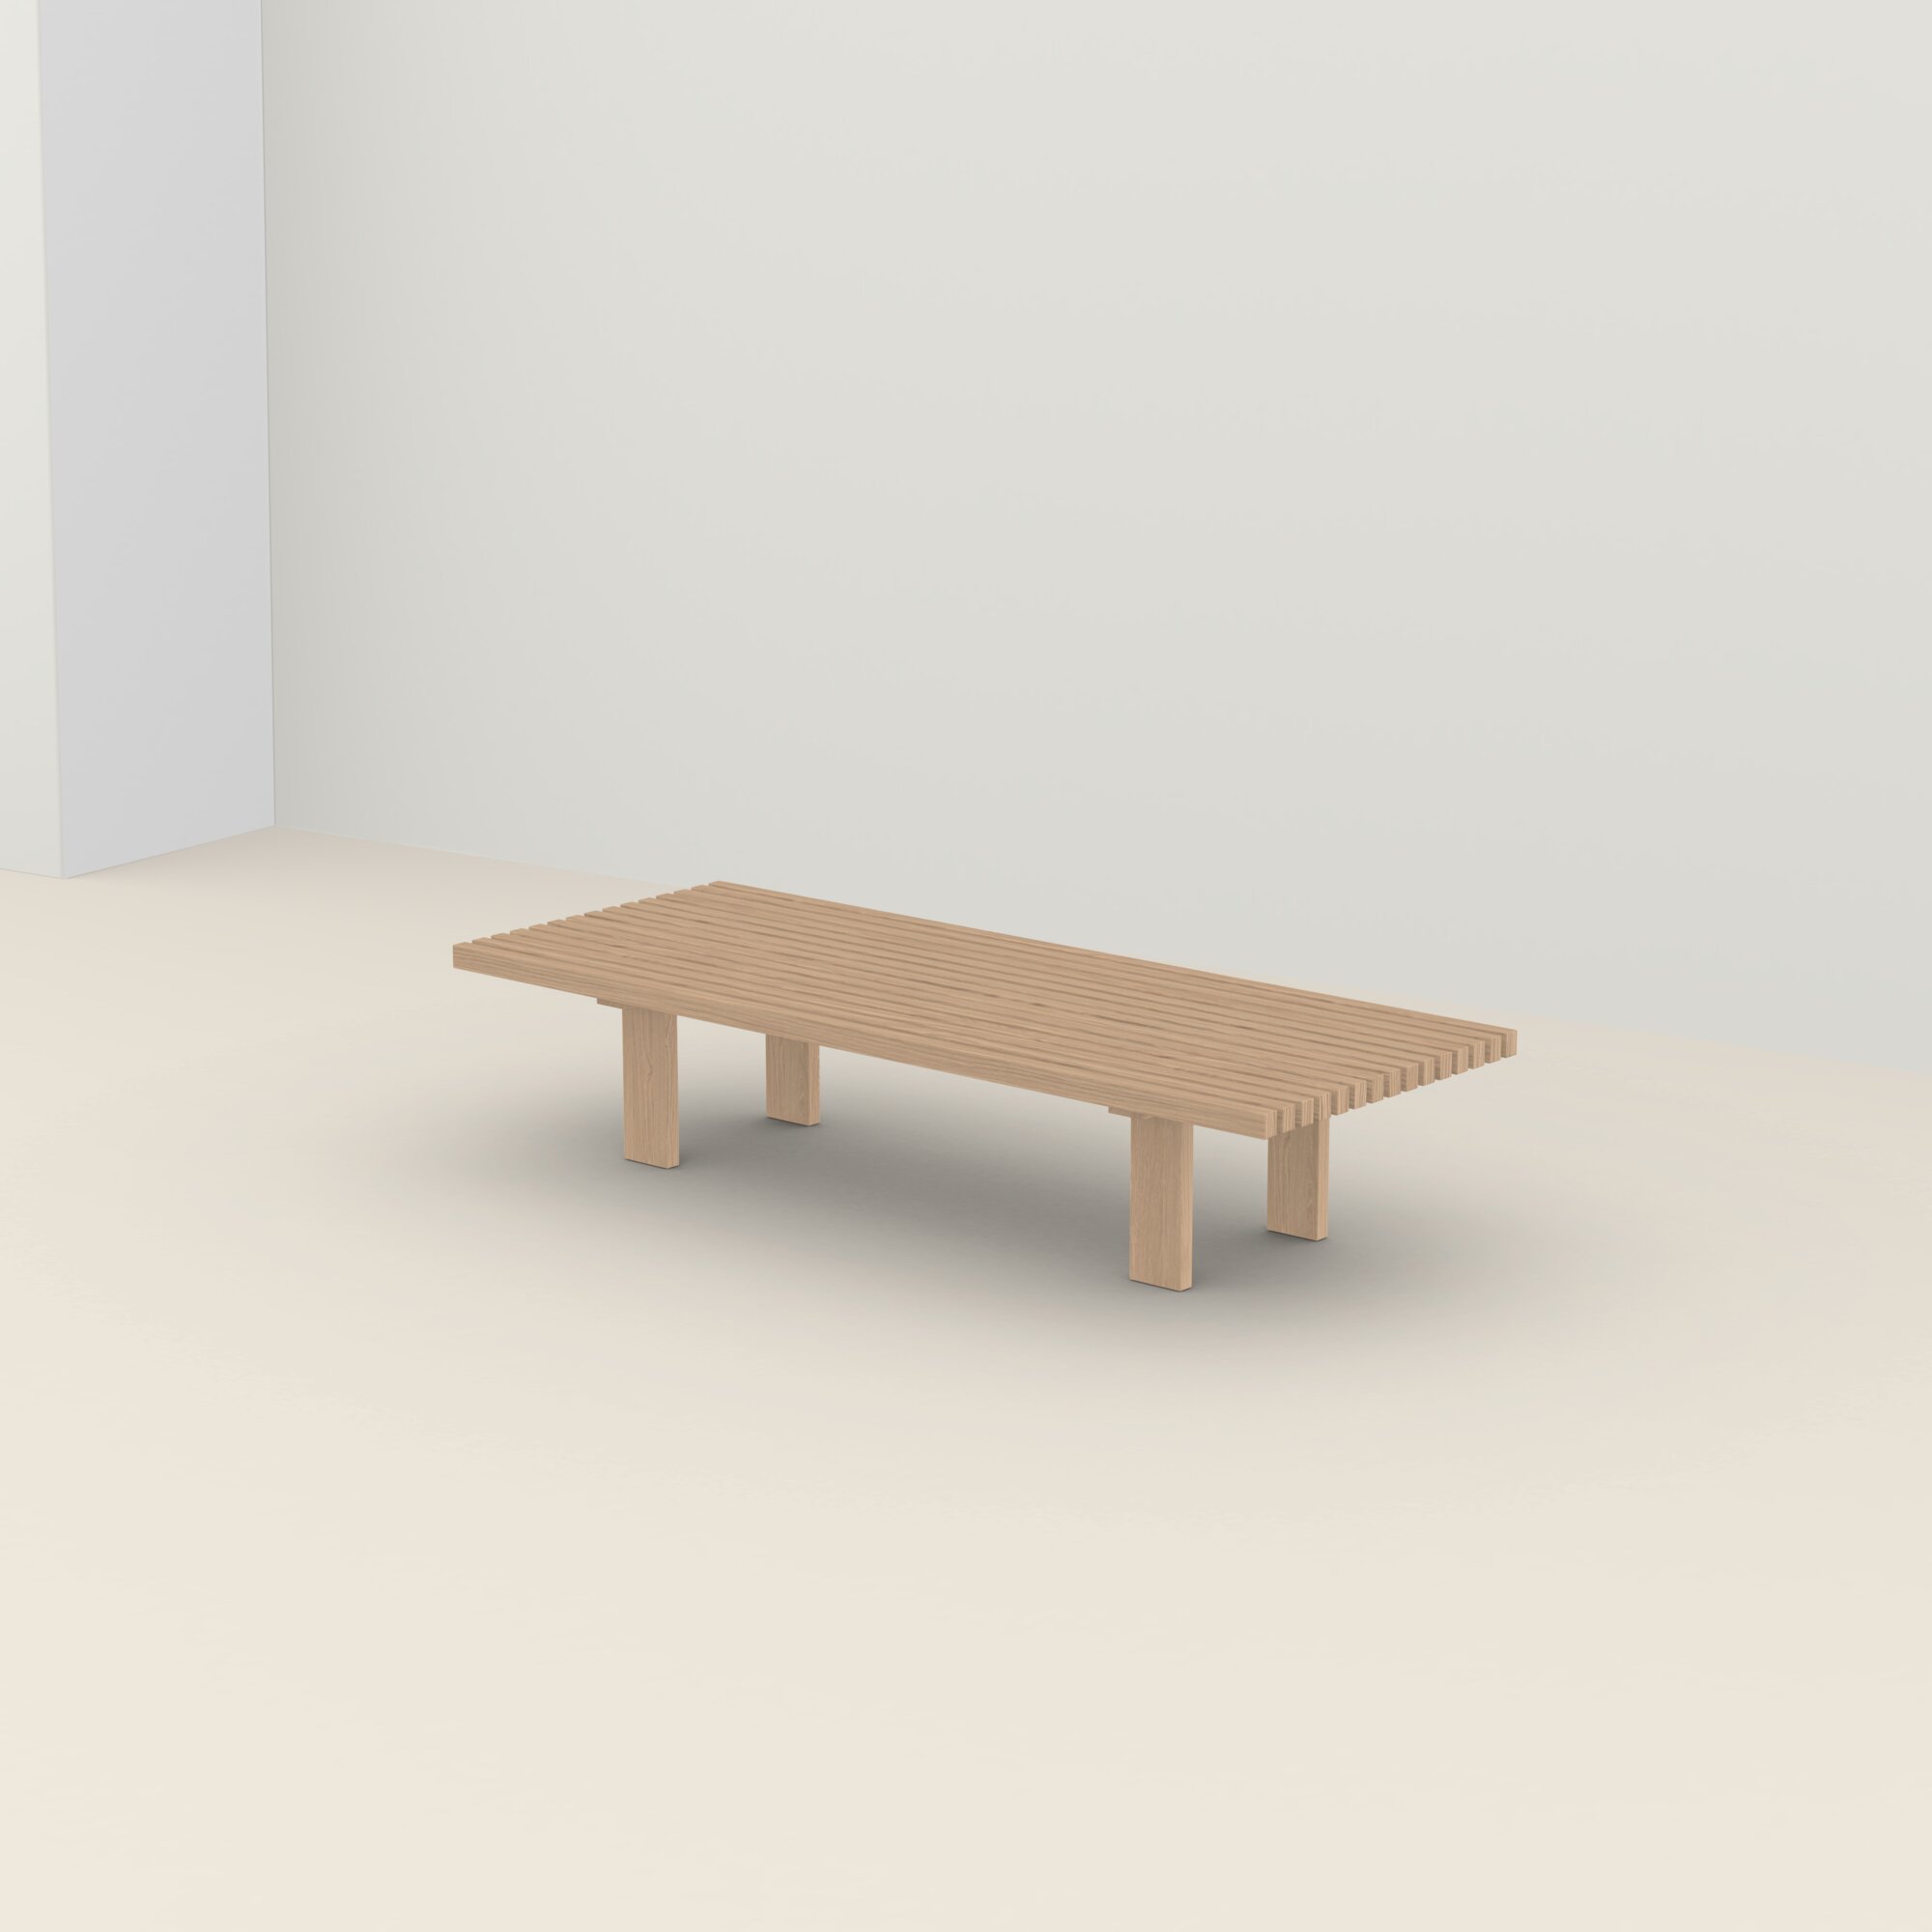 Design Coffee Table | Elements Coffee Table Oak hardwax oil natural light 3041 | Oak hardwax oil natural light 3041 | Studio HENK| 